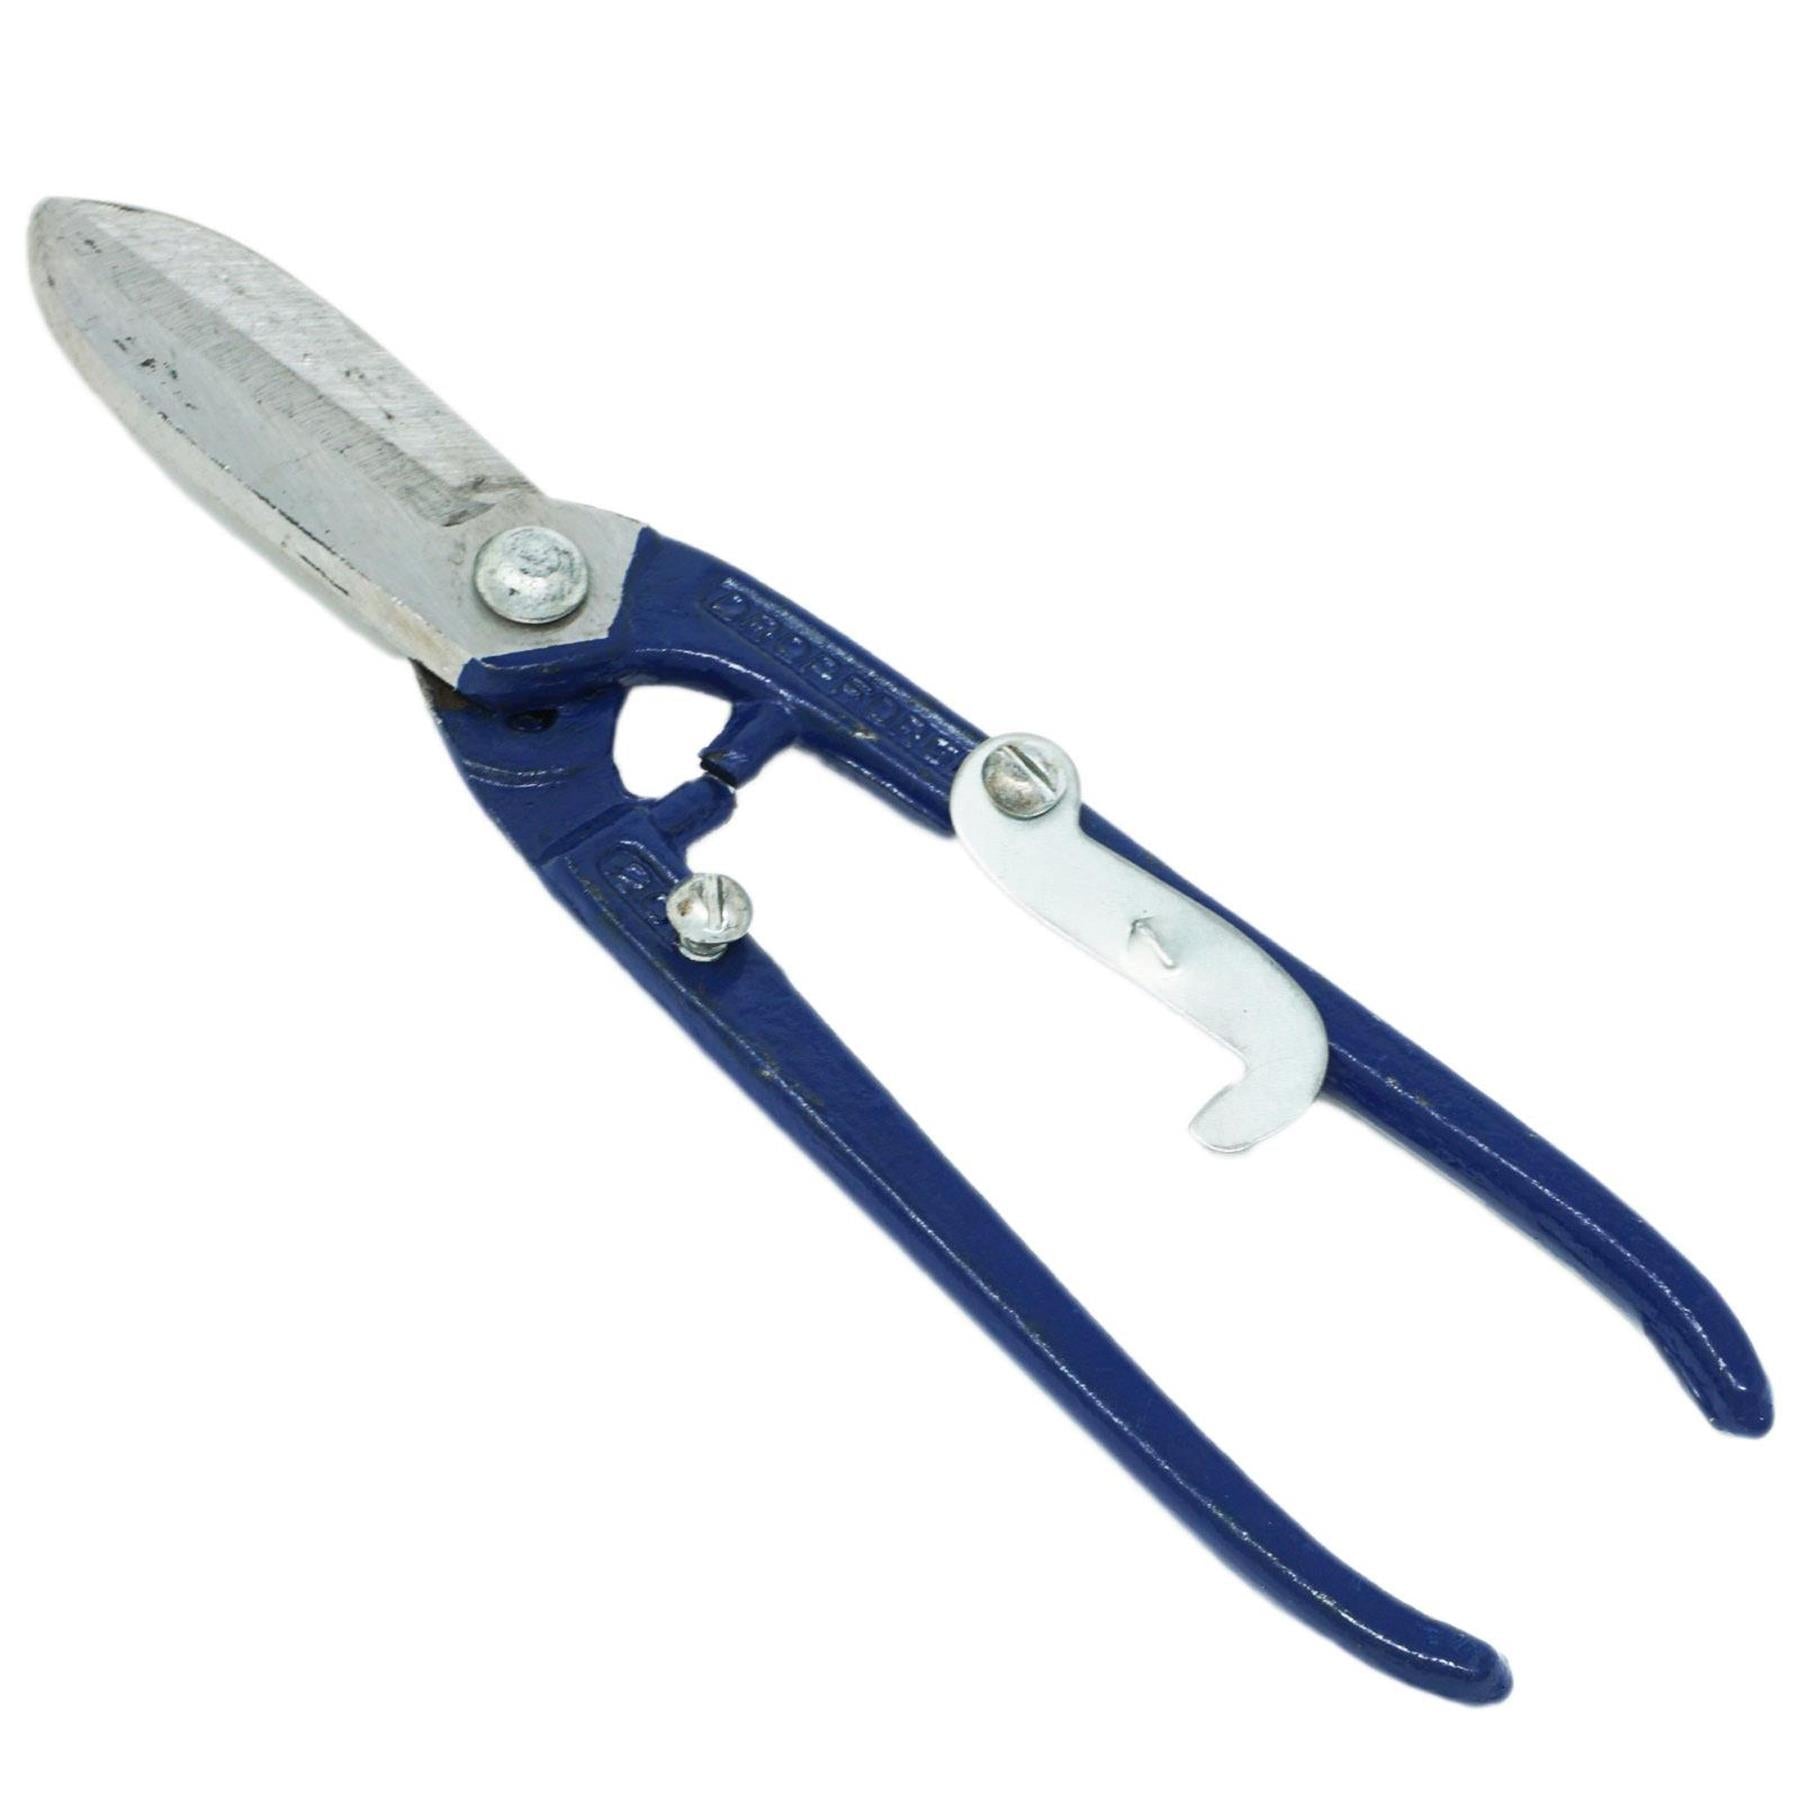 Thin Sheet Metal Tin Snips 8" Cutting Shears Scissors Cutter Plastic